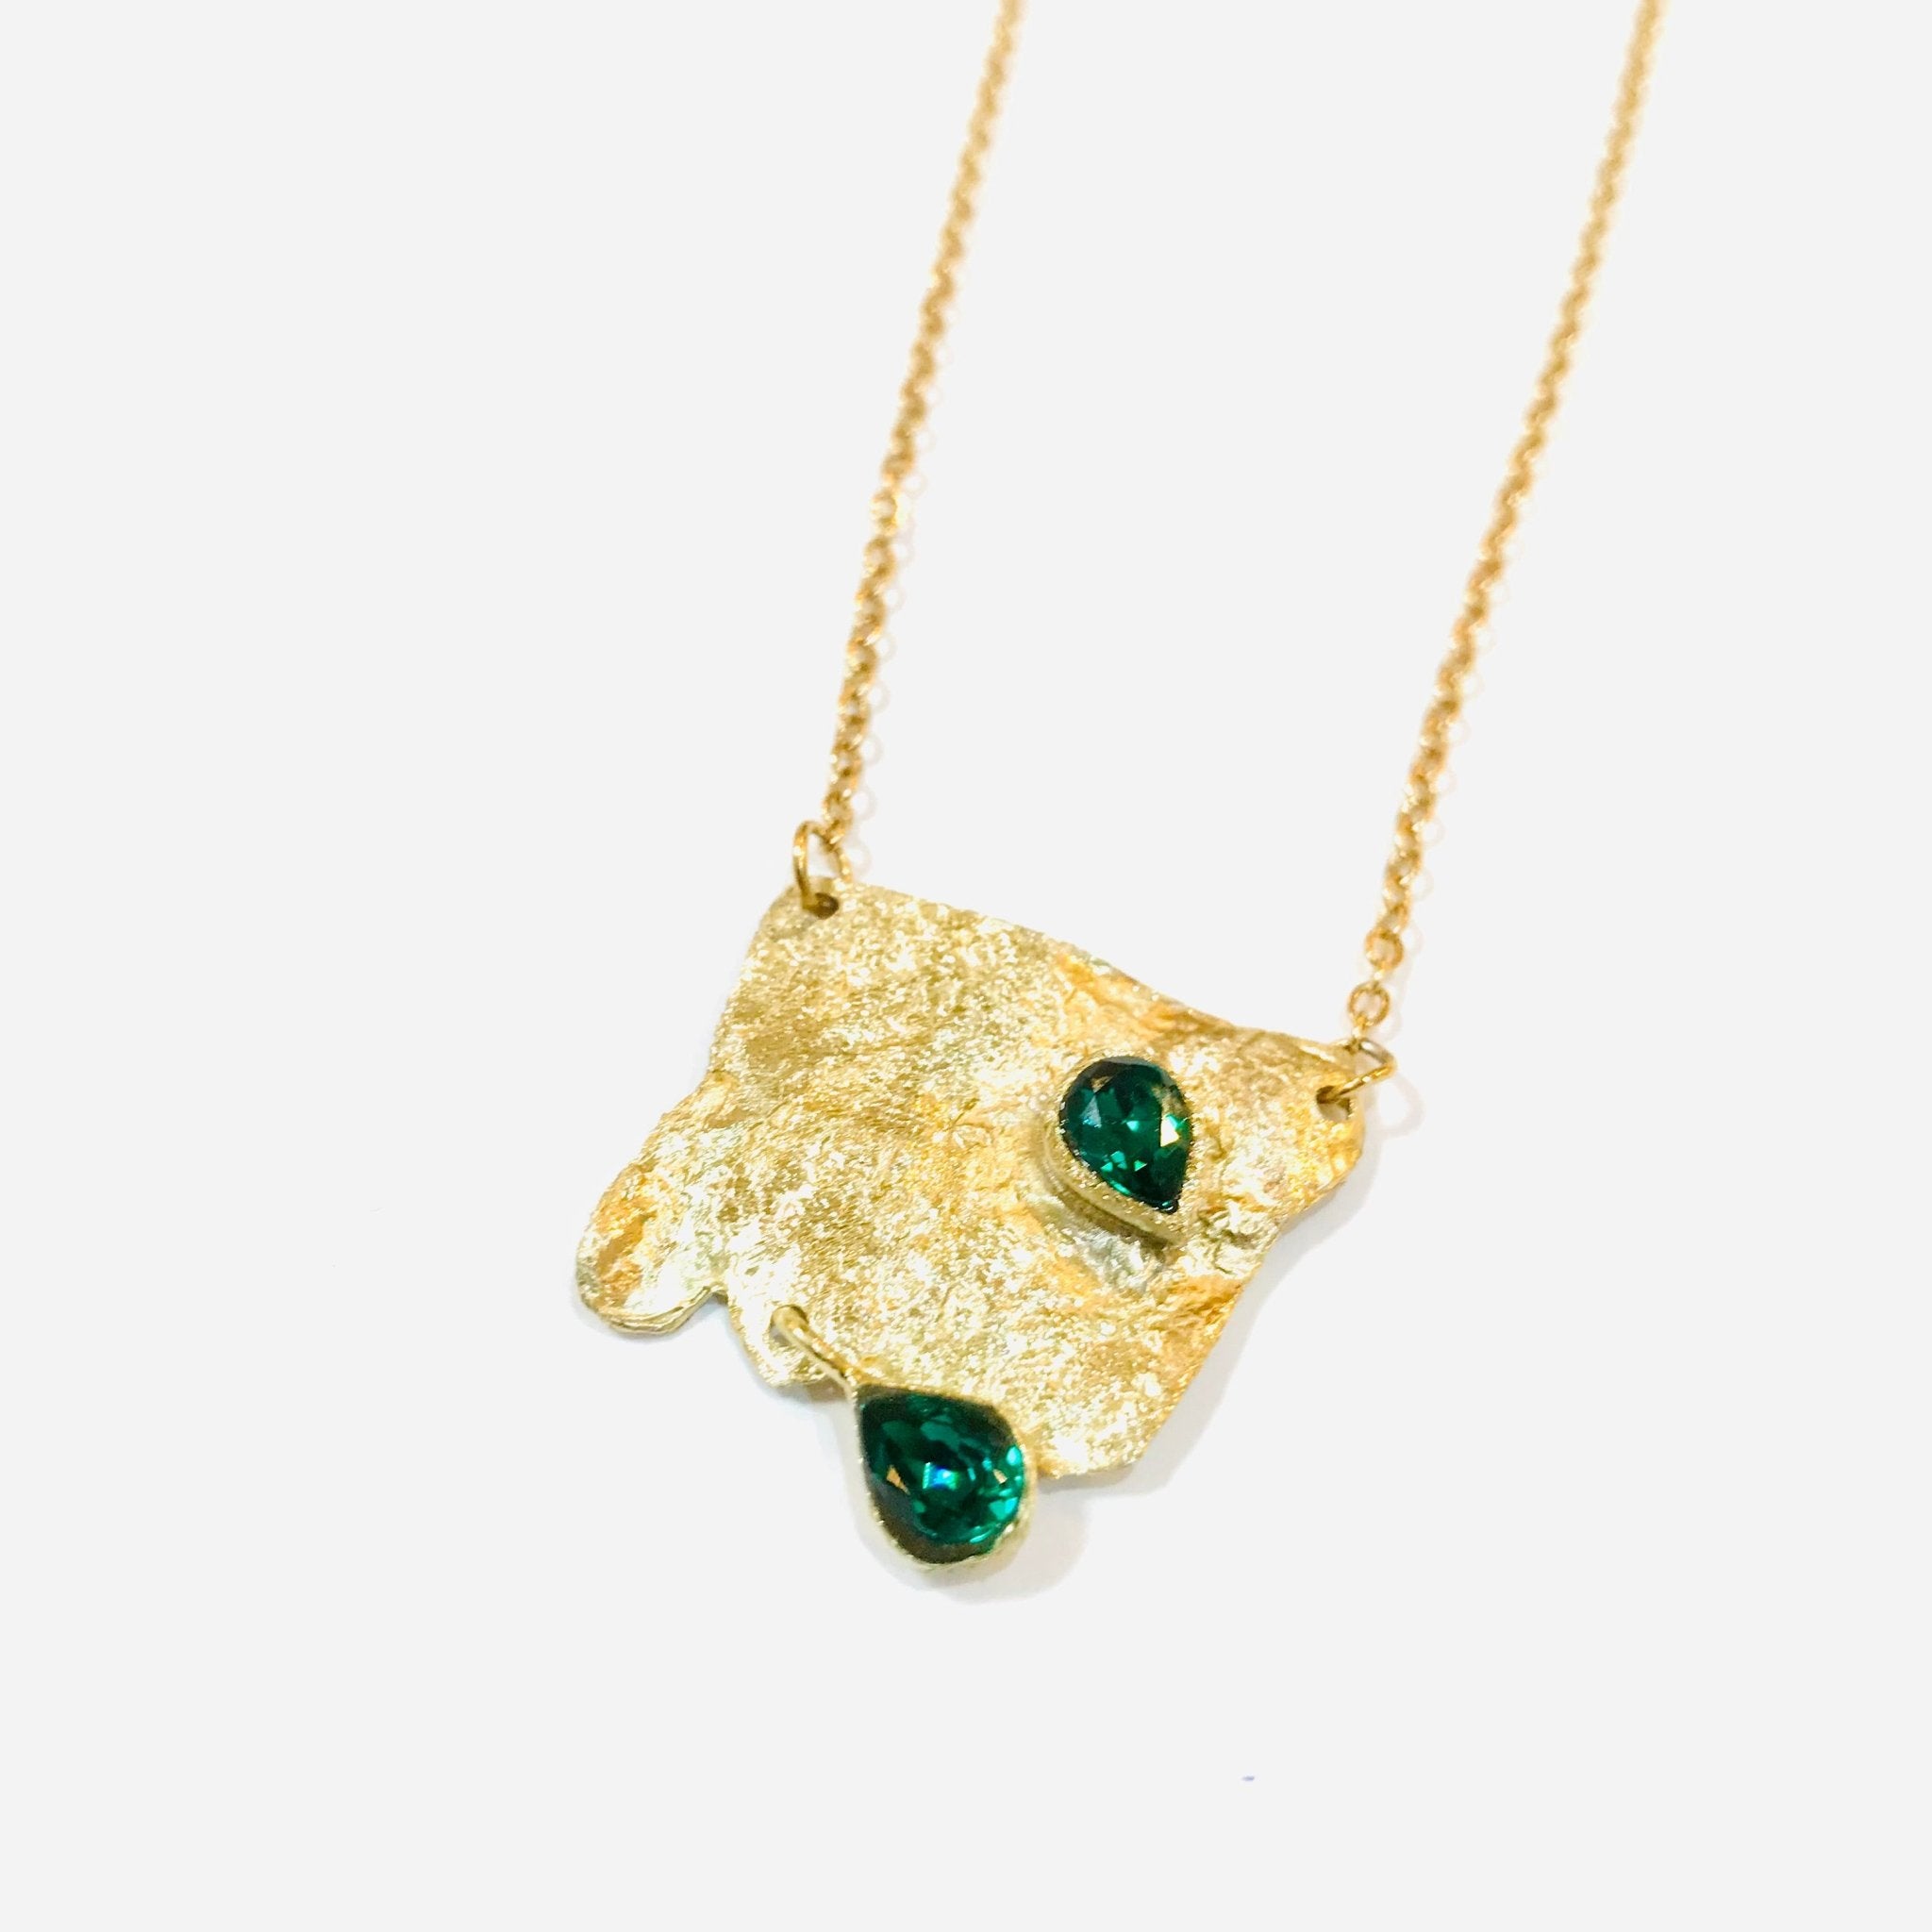 Bronze & Emerald Necklace - The Nancy Smillie Shop - Art, Jewellery & Designer Gifts Glasgow